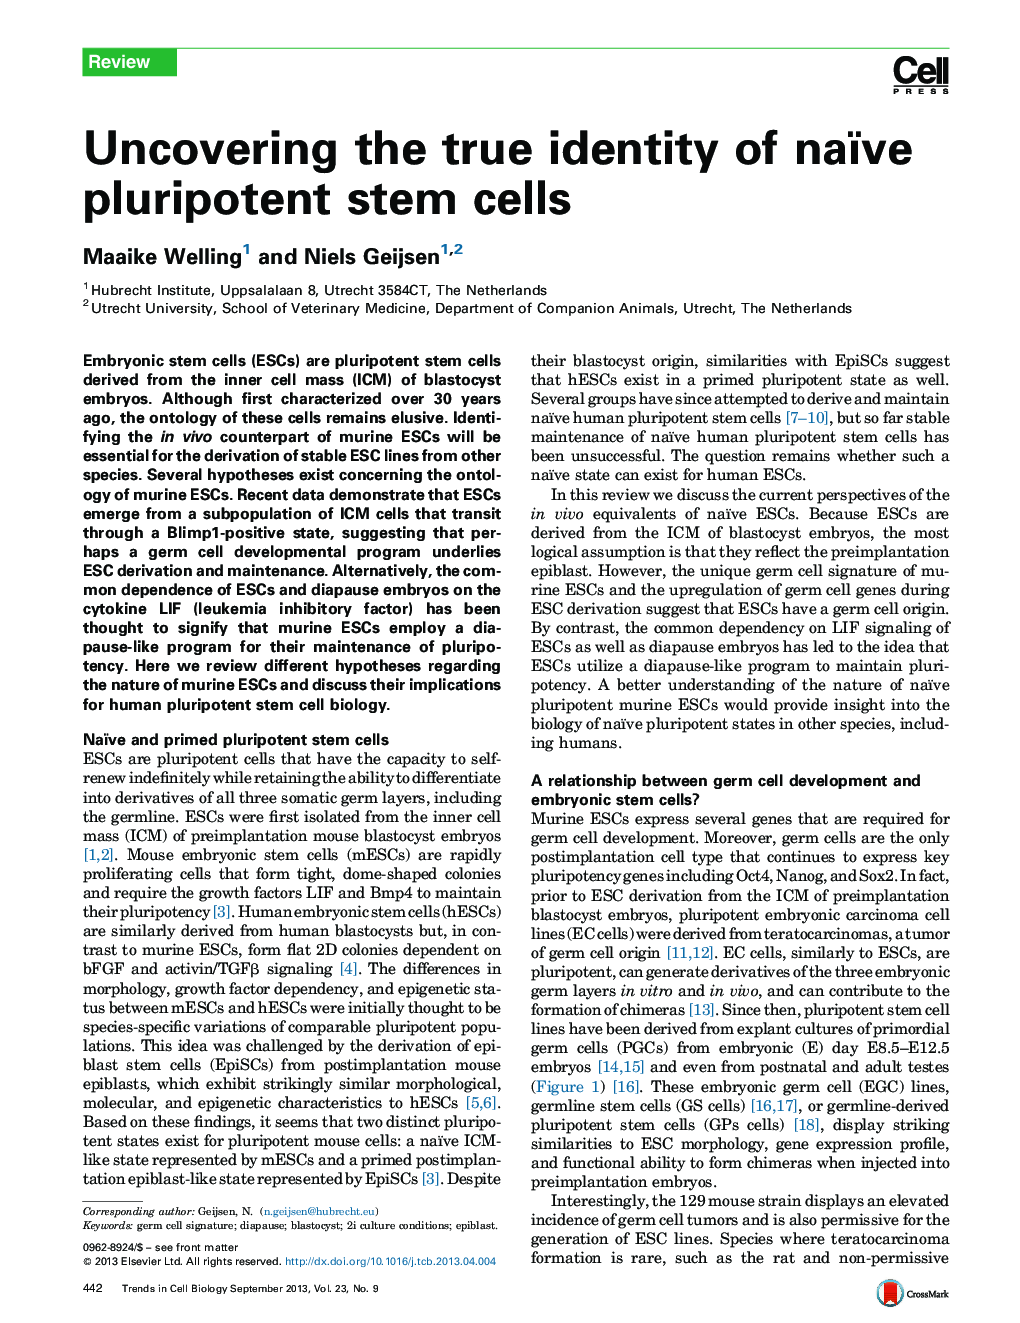 Uncovering the true identity of naïve pluripotent stem cells